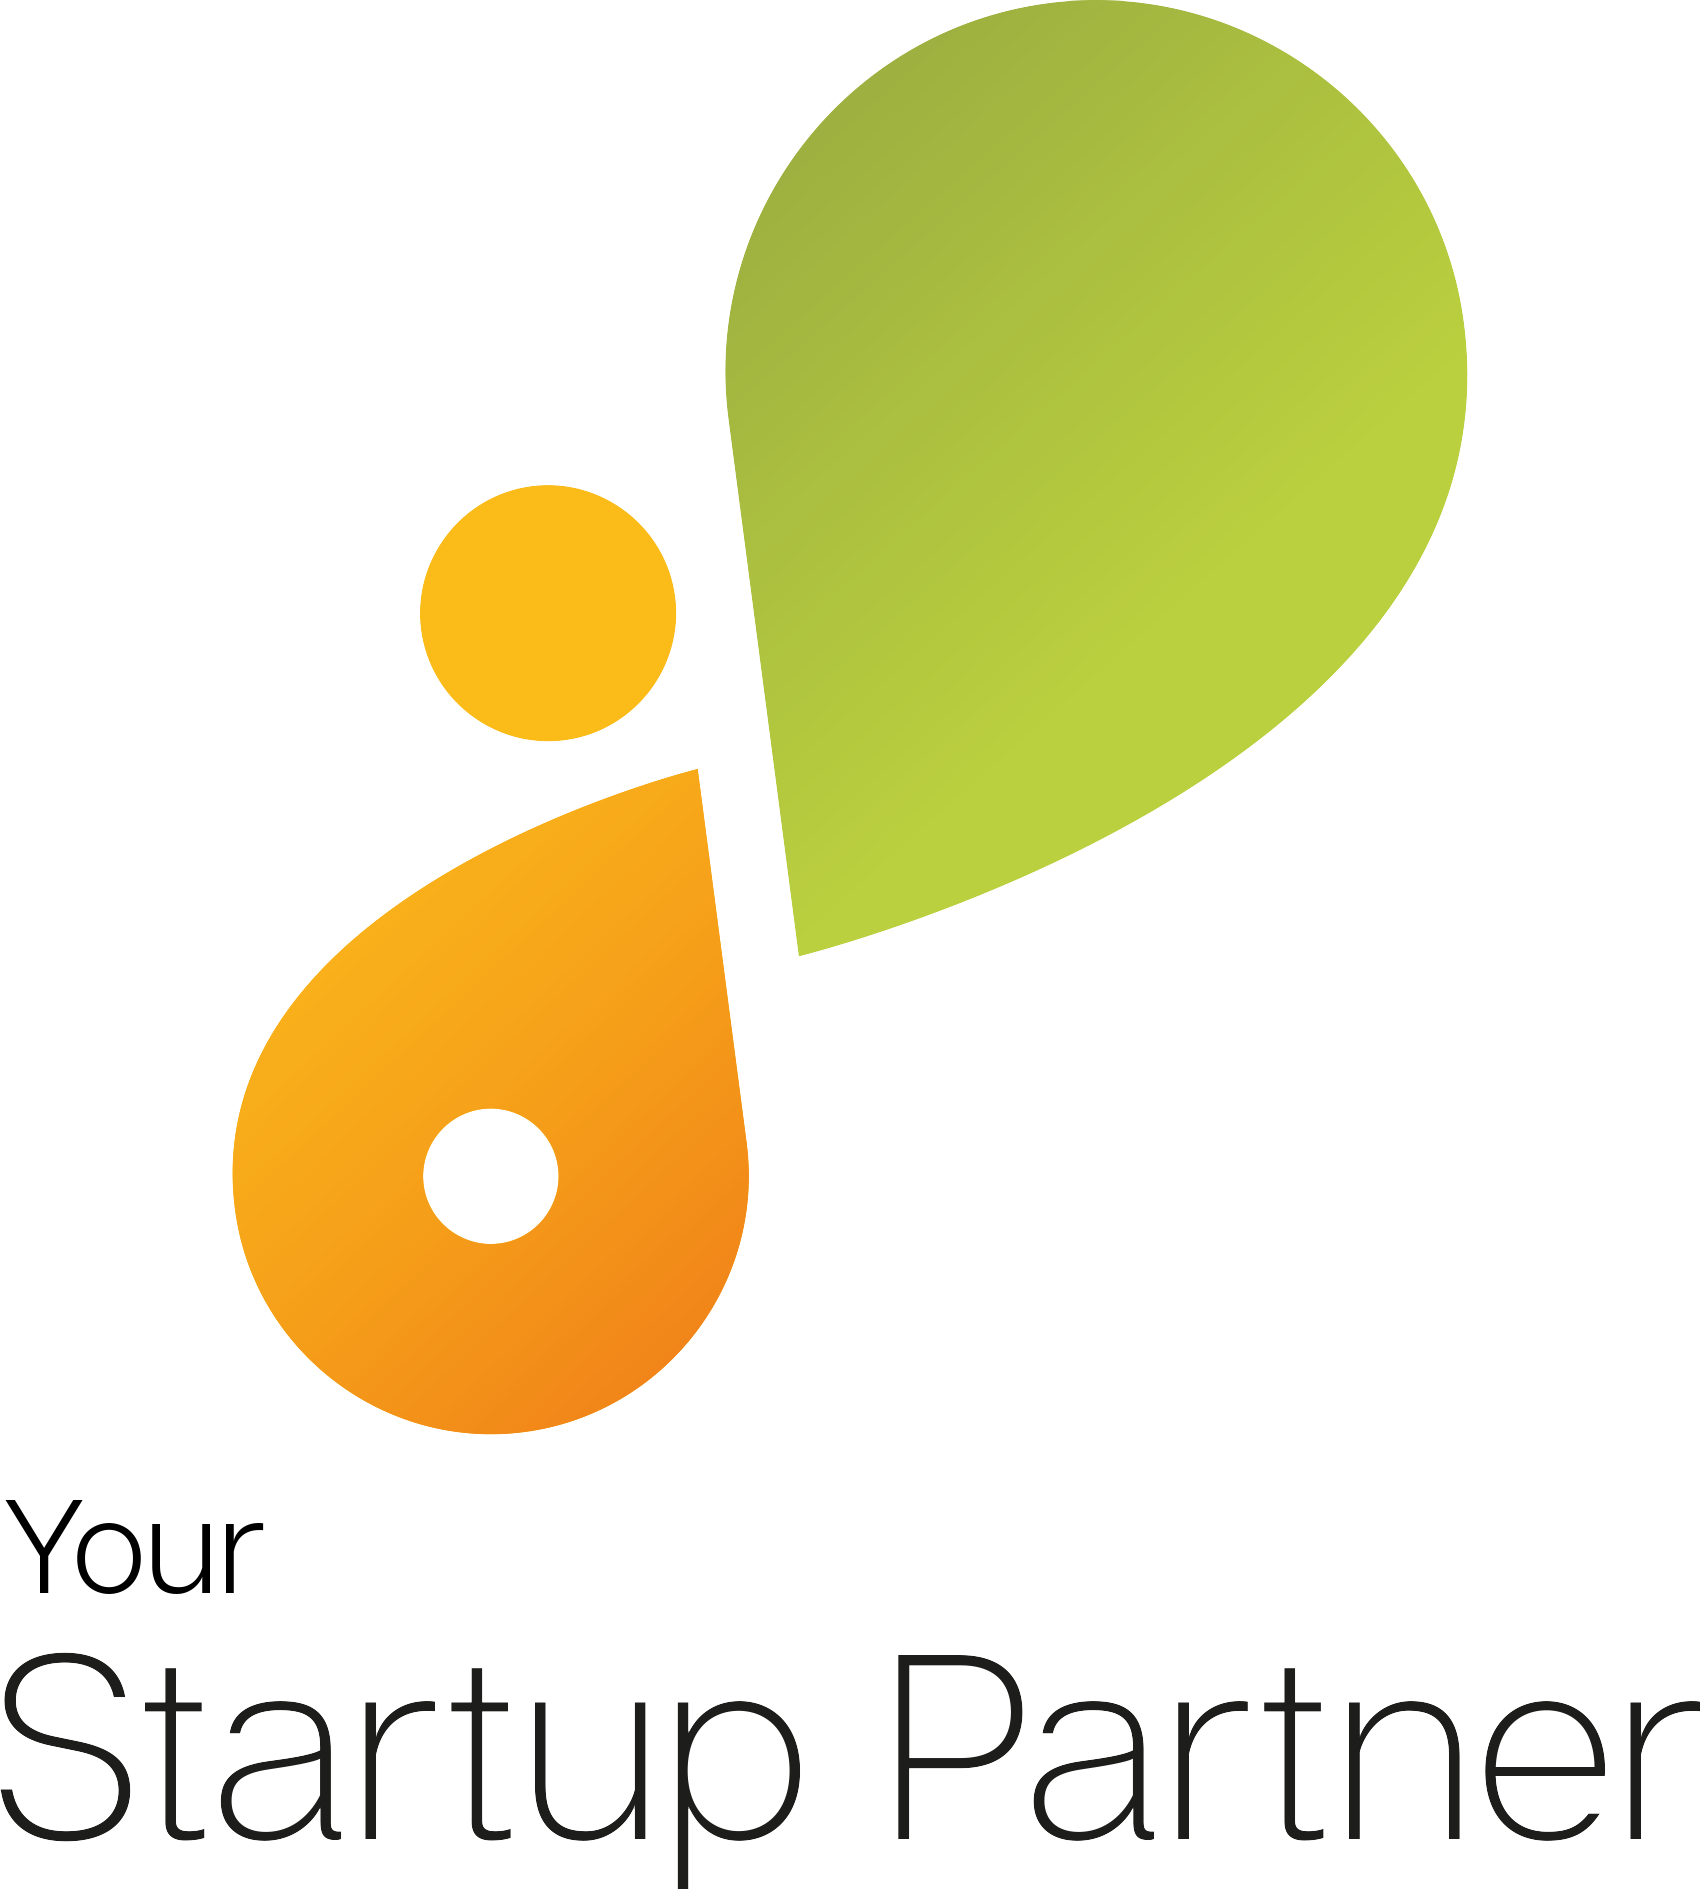 Your Startup Partner